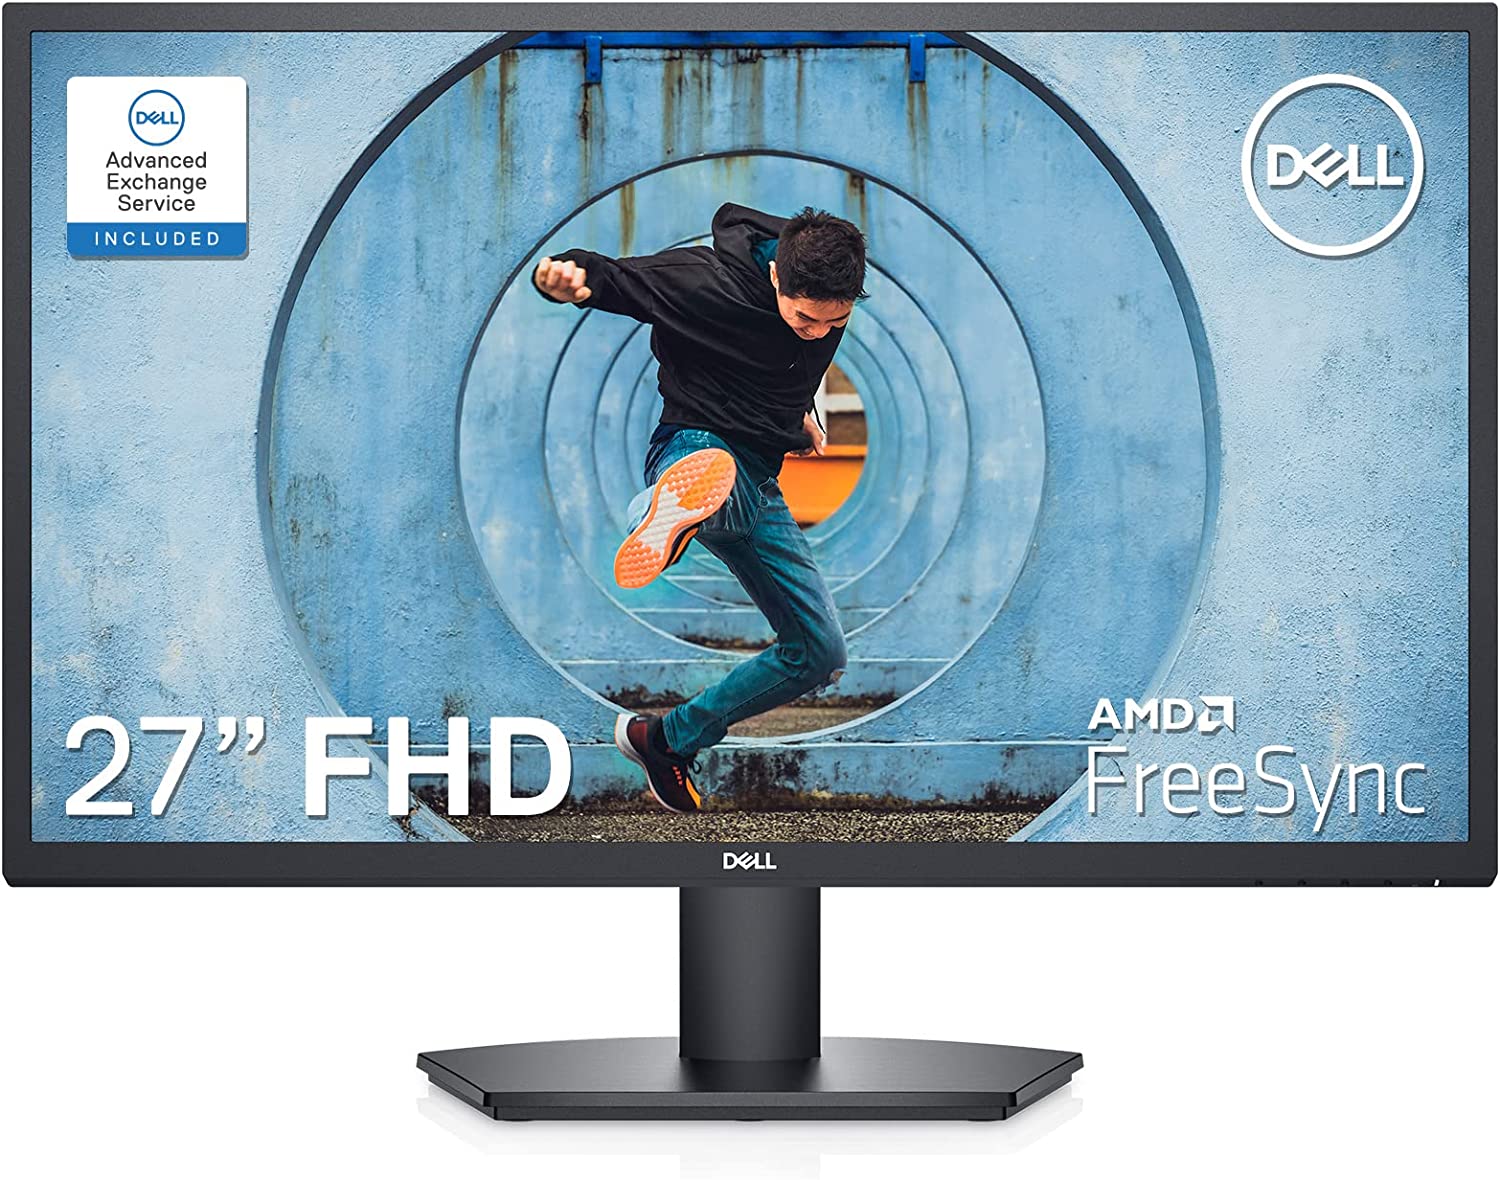 Dell 27-Inch FHD Monitor